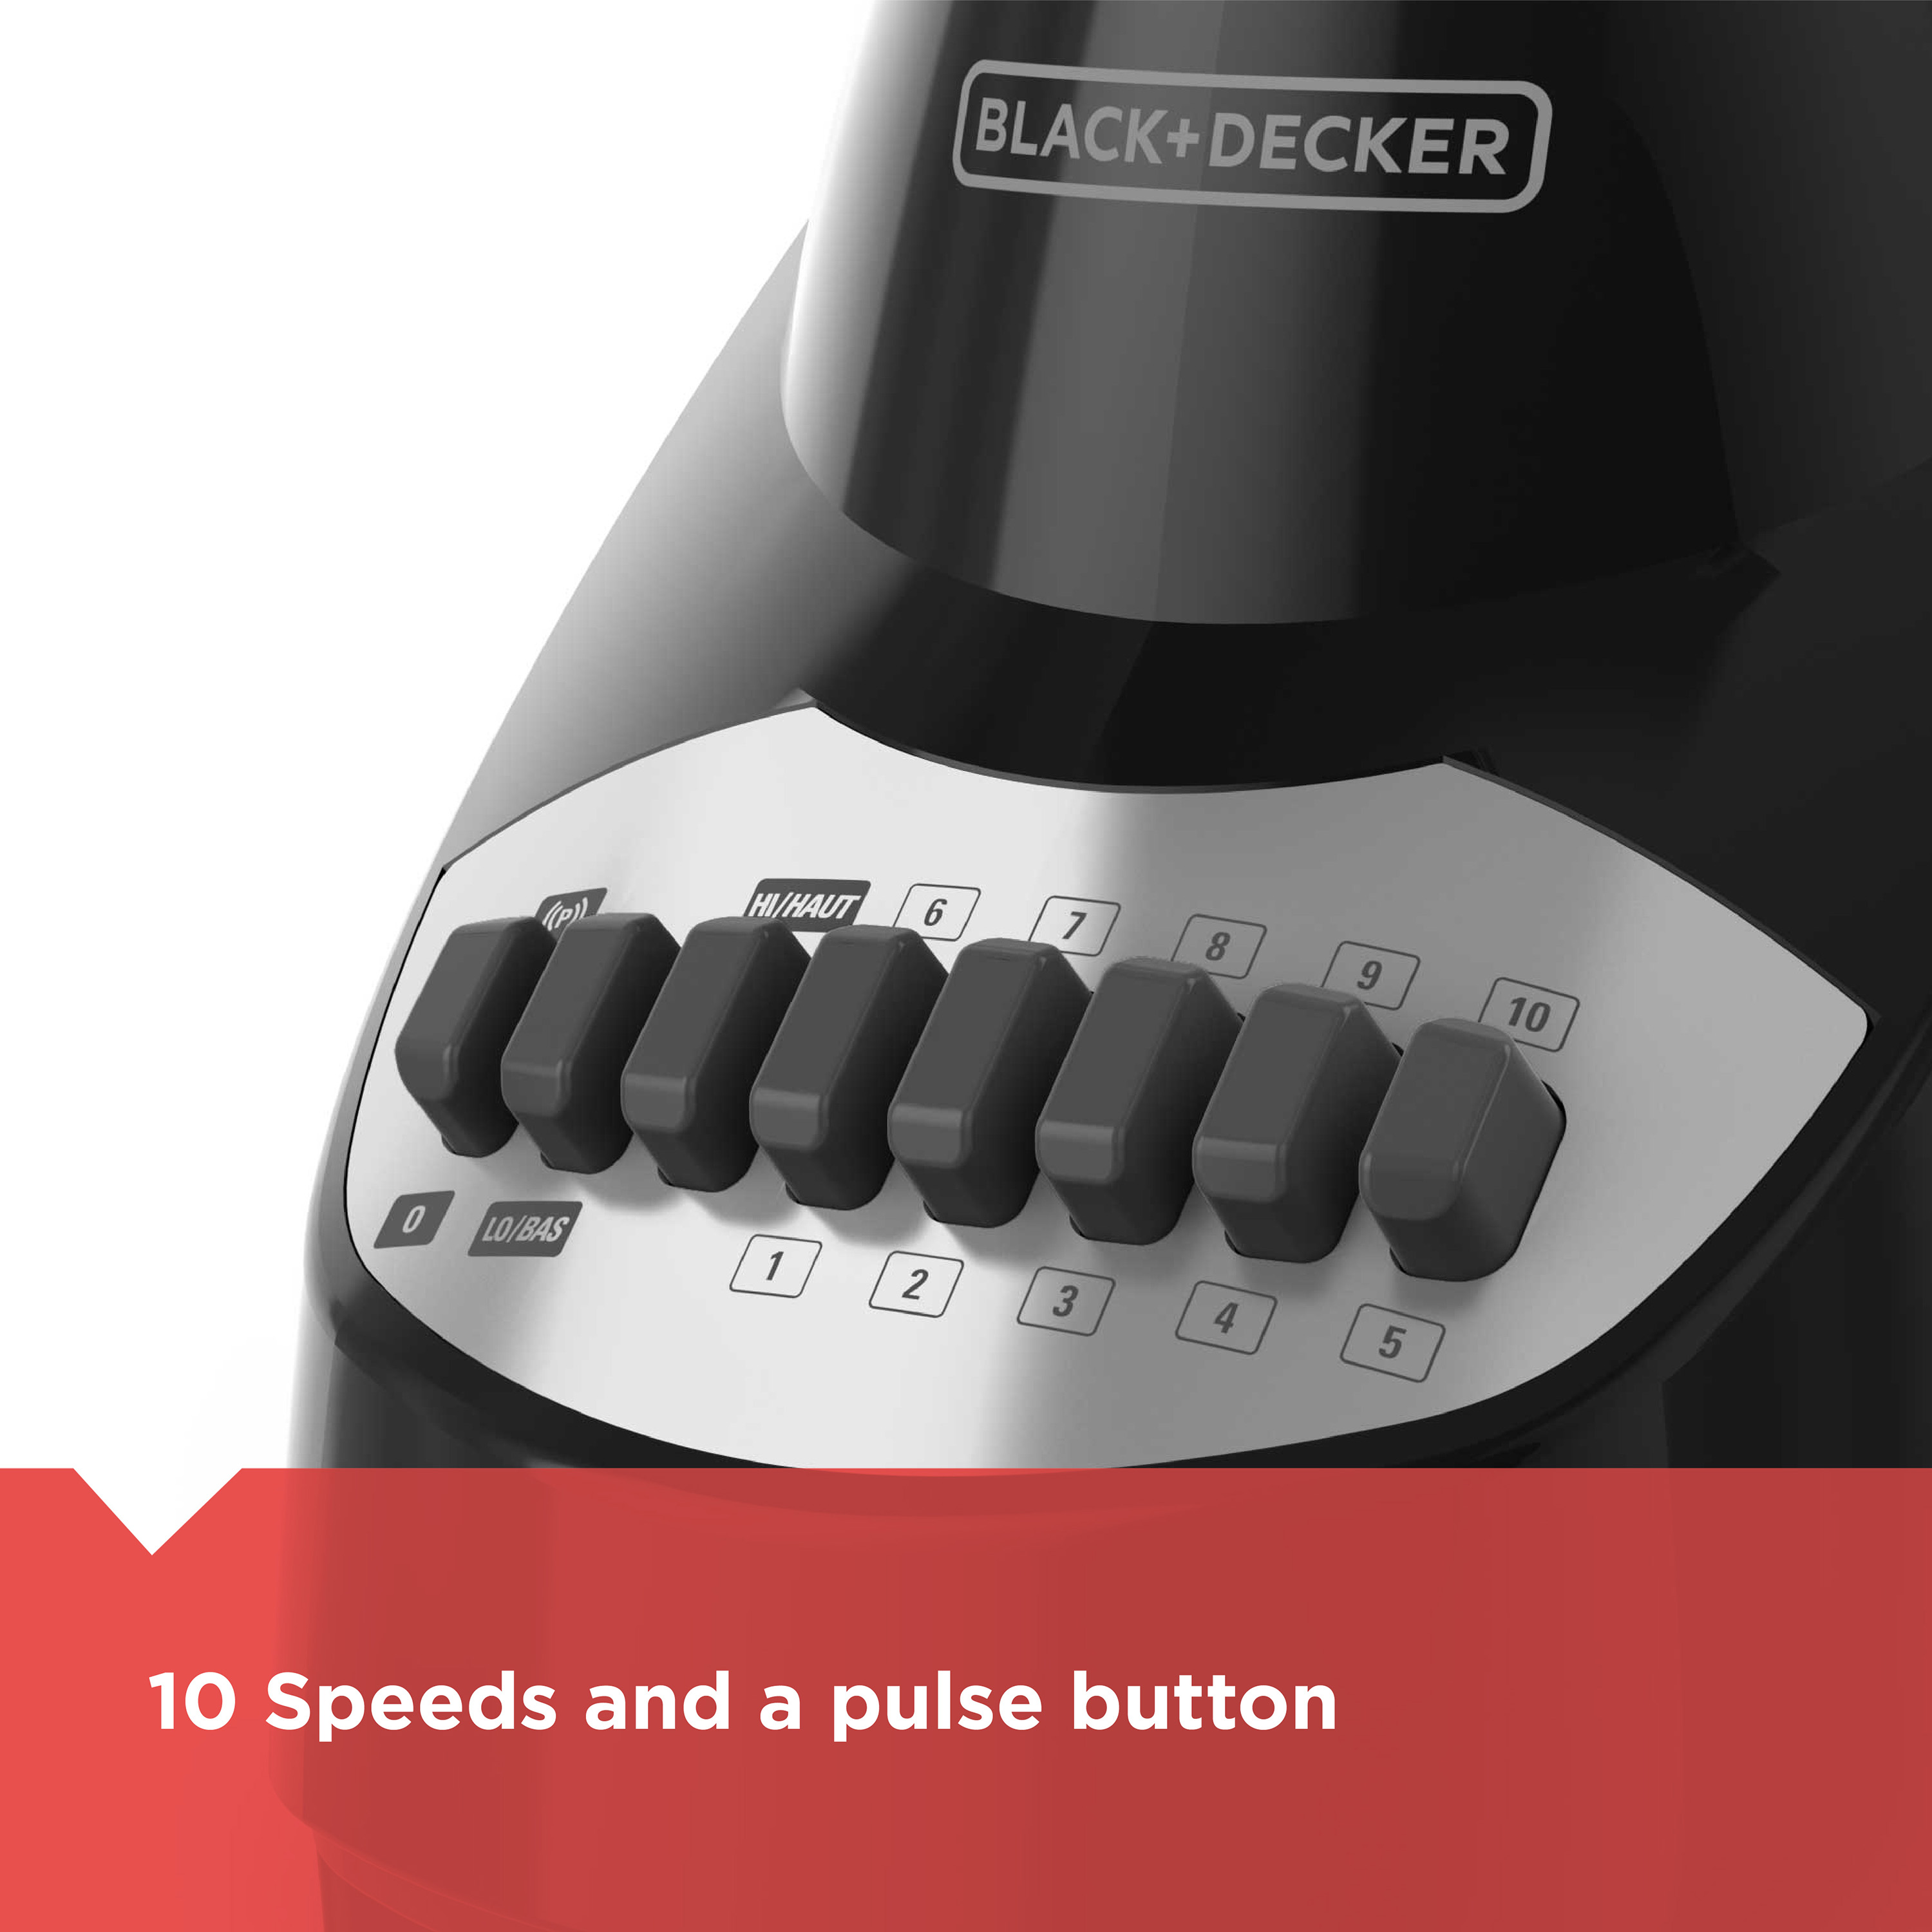 BLACK + DECKER 10-Speed Blender, 550 Watts, 50 Oz (6.25-cup) Glass Blending Jar, Black, BL2010BG - image 5 of 8